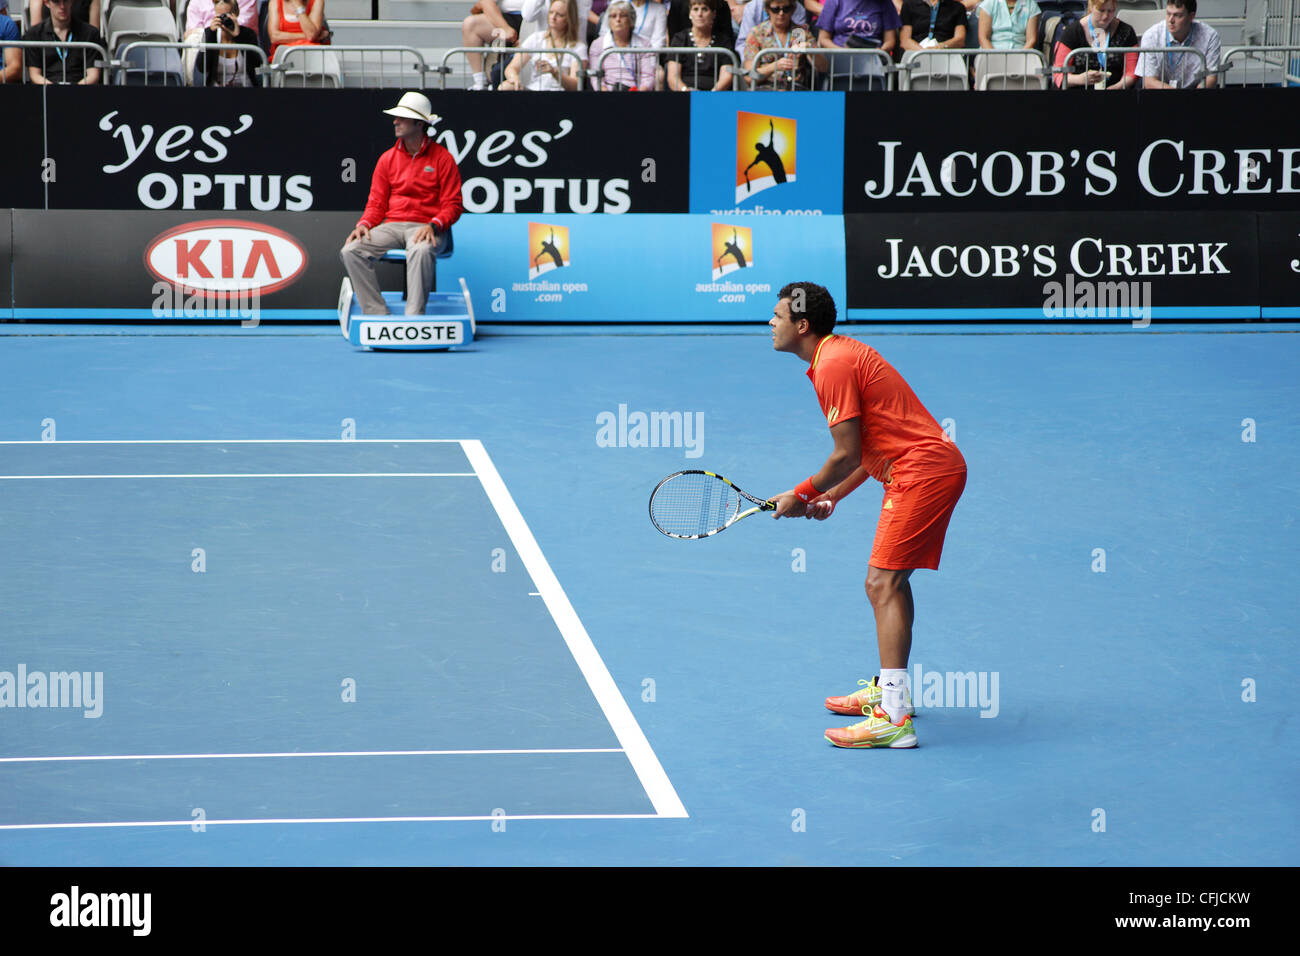 MELBOURNE, AUSTRALIA - JANUARY 20, 2012: ATP world number 5 player Jo Wilfried Tsonga prepares a return against Frederico Gil. Stock Photo